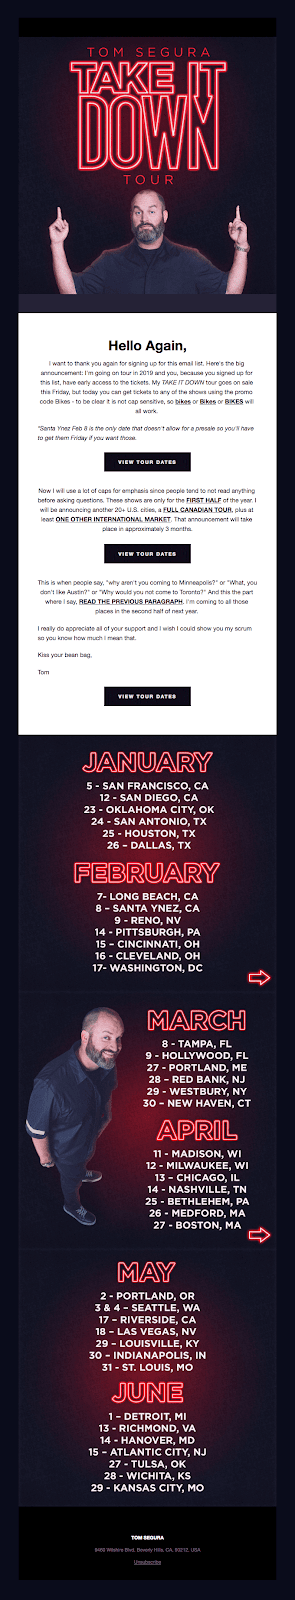 Tom Segura "Take It Down Tour" event invitation email template